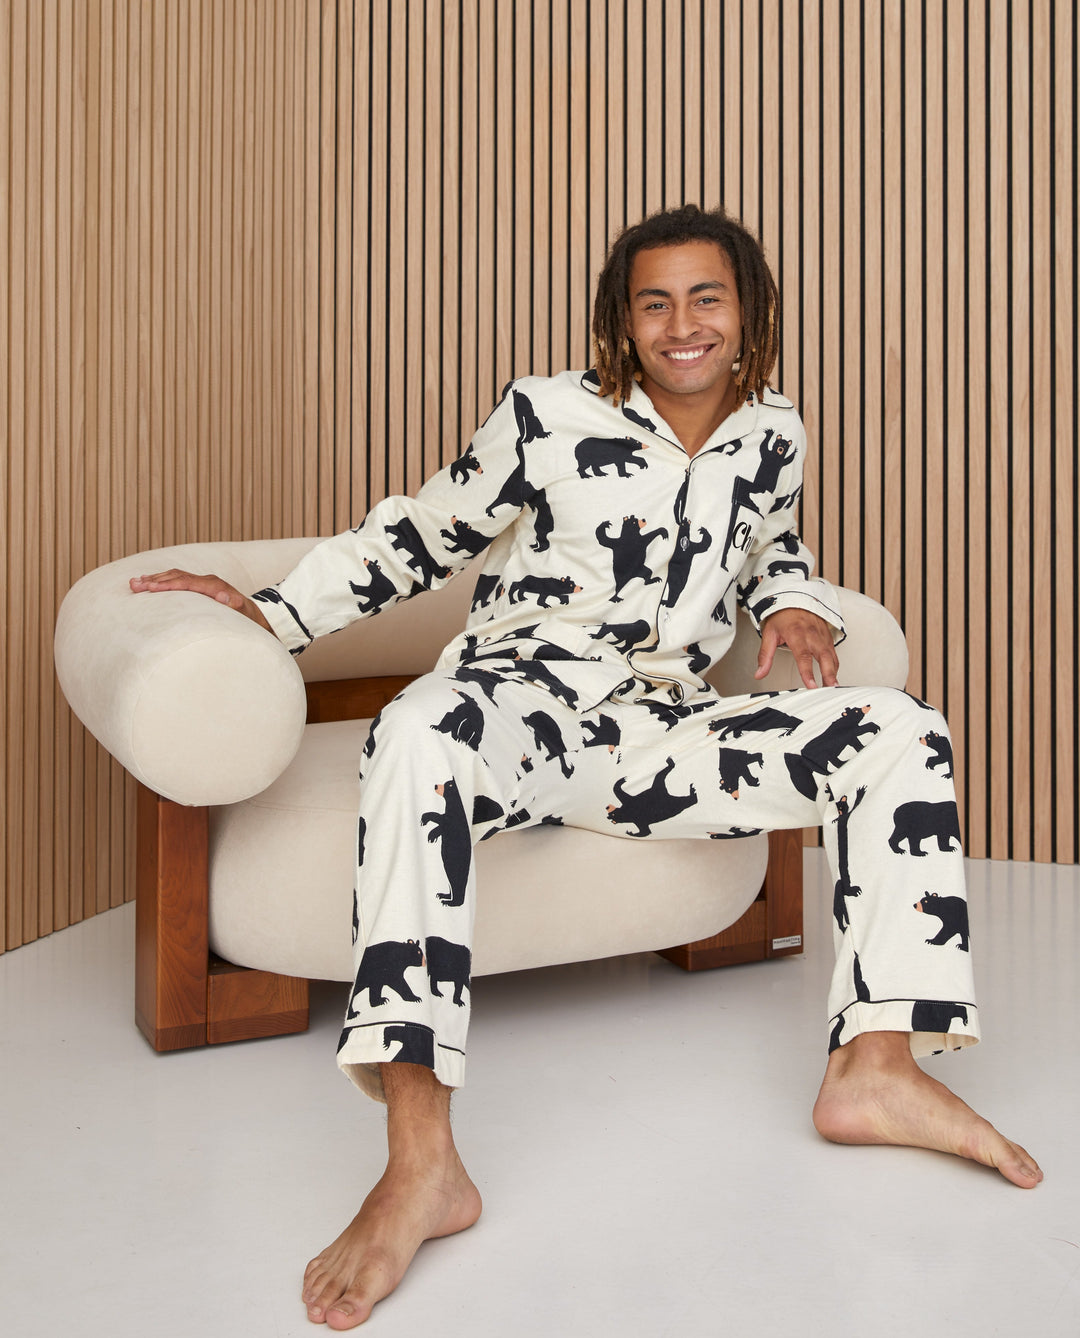 Bear Print Men's Pajama Set